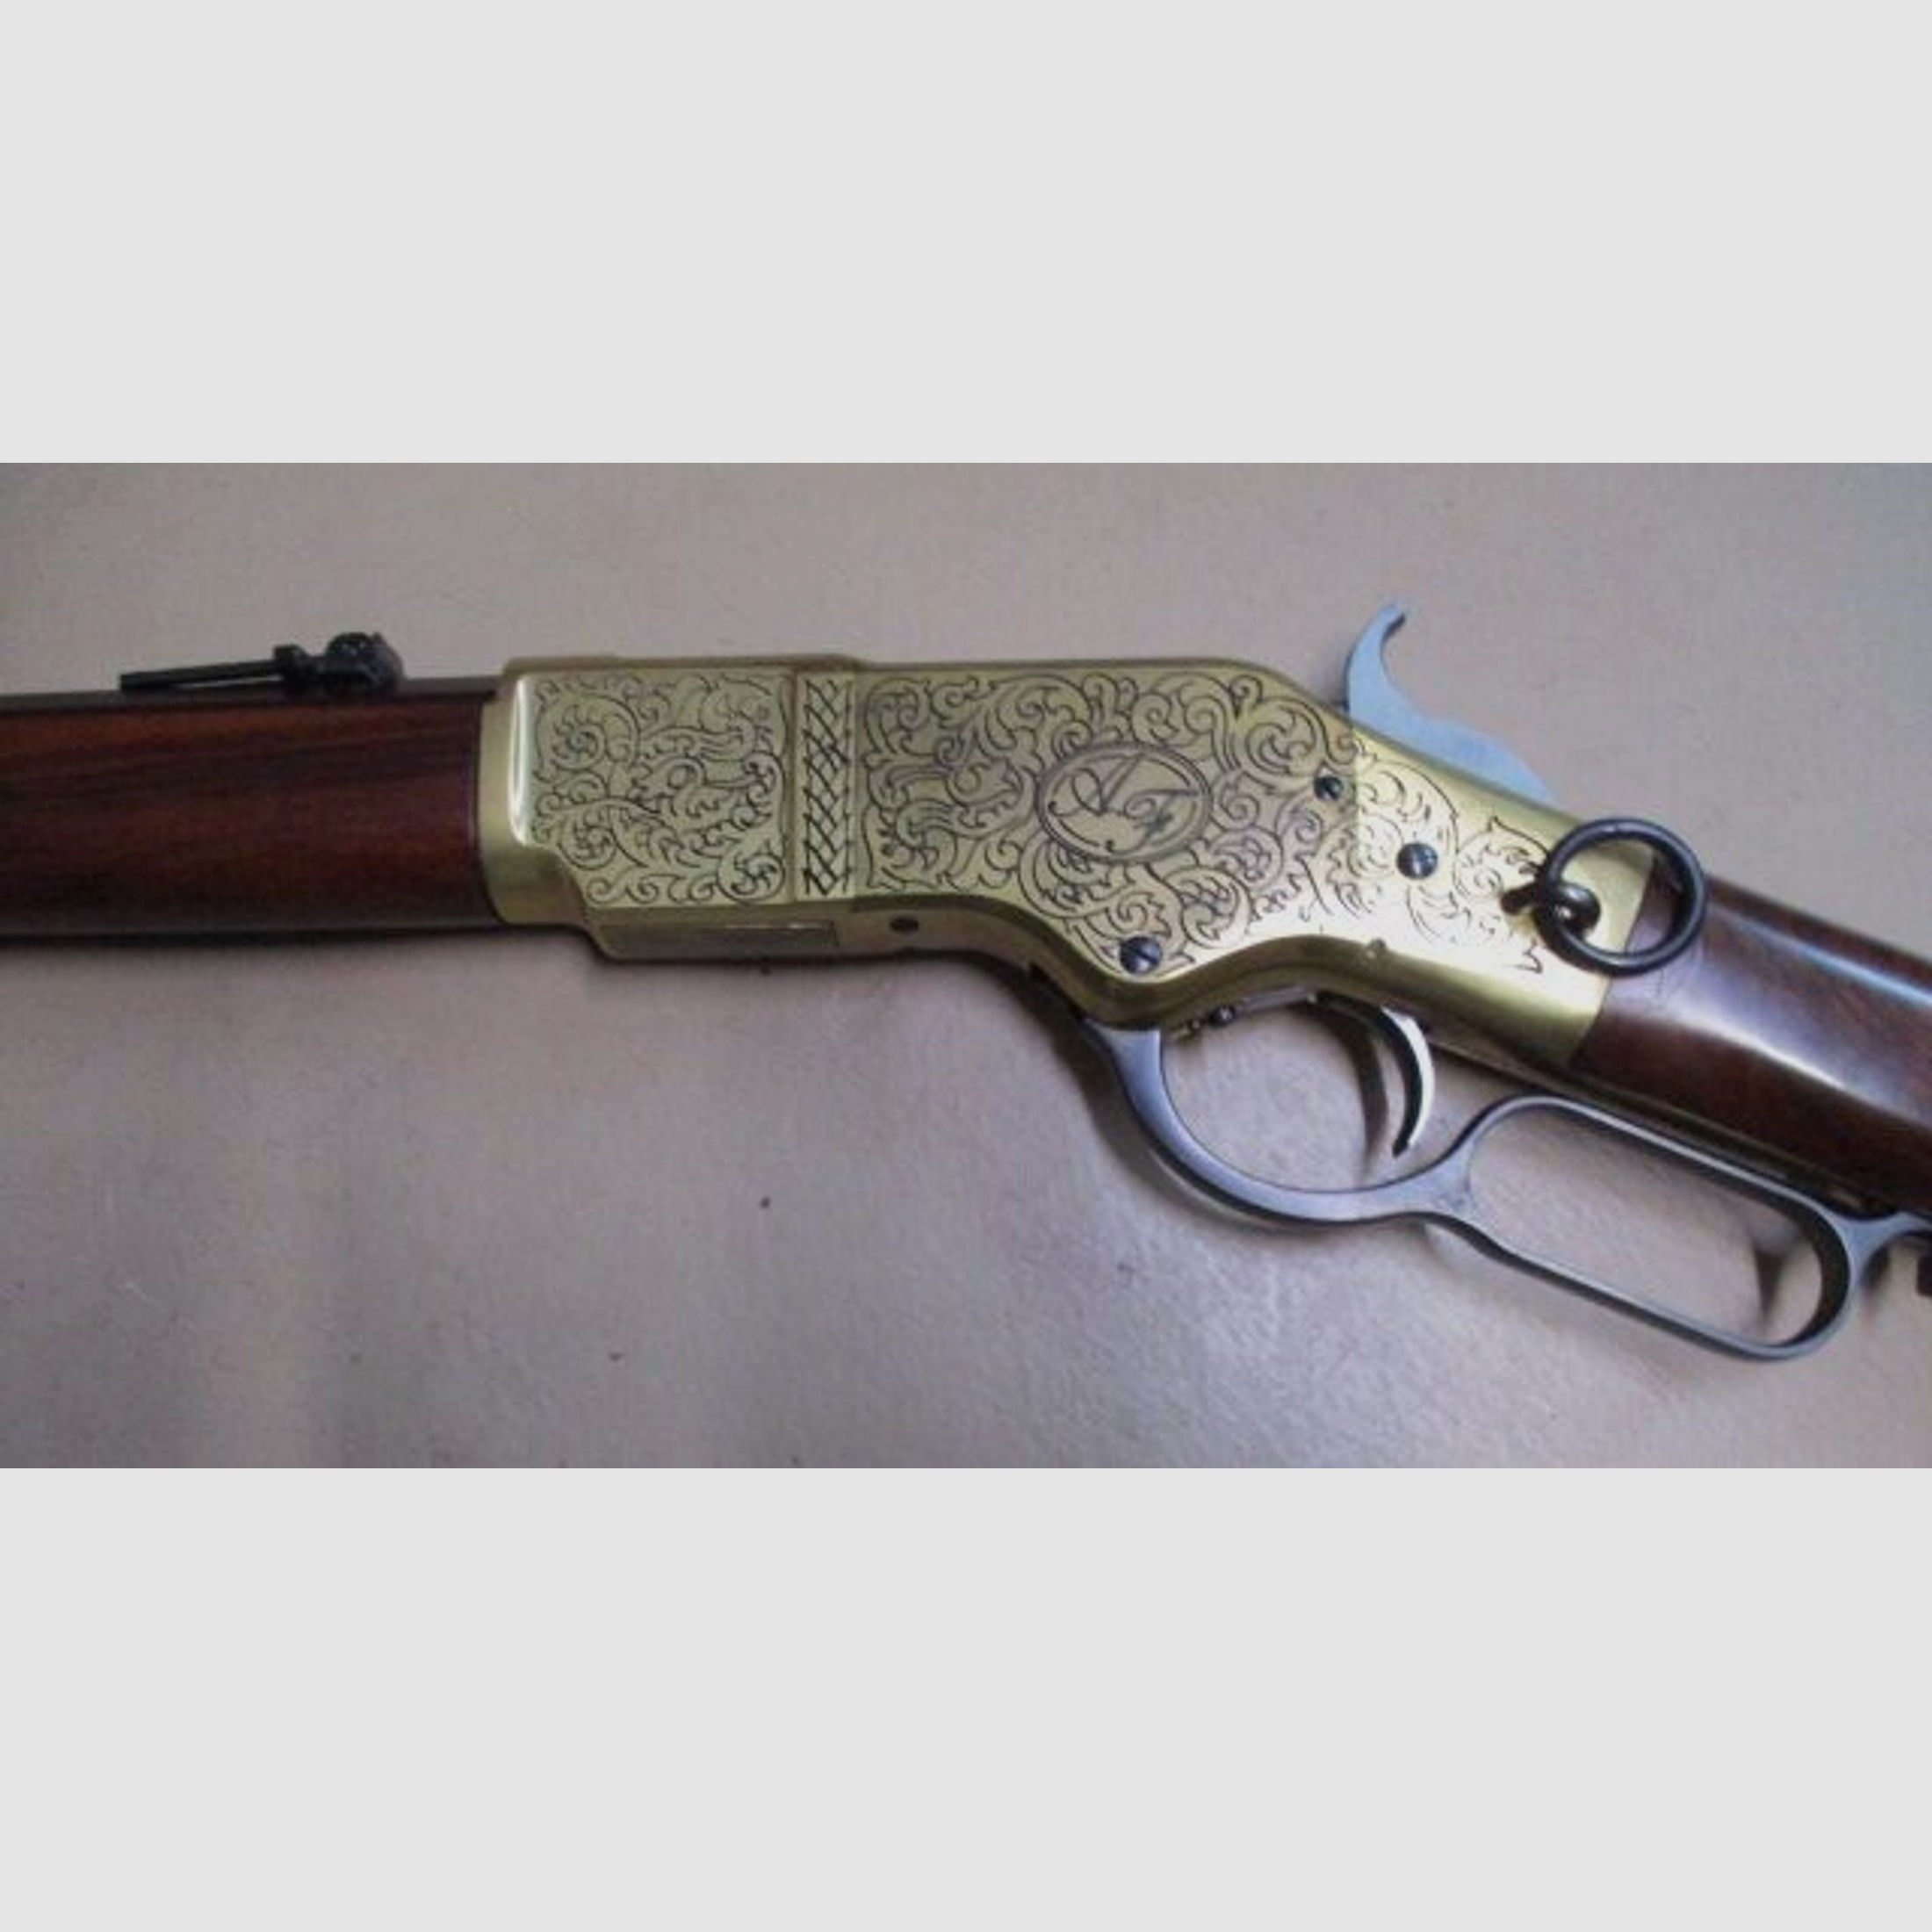 Unterhebelrepetierbüchse Hege-Uberti 1866 Sporting Rifle	 66